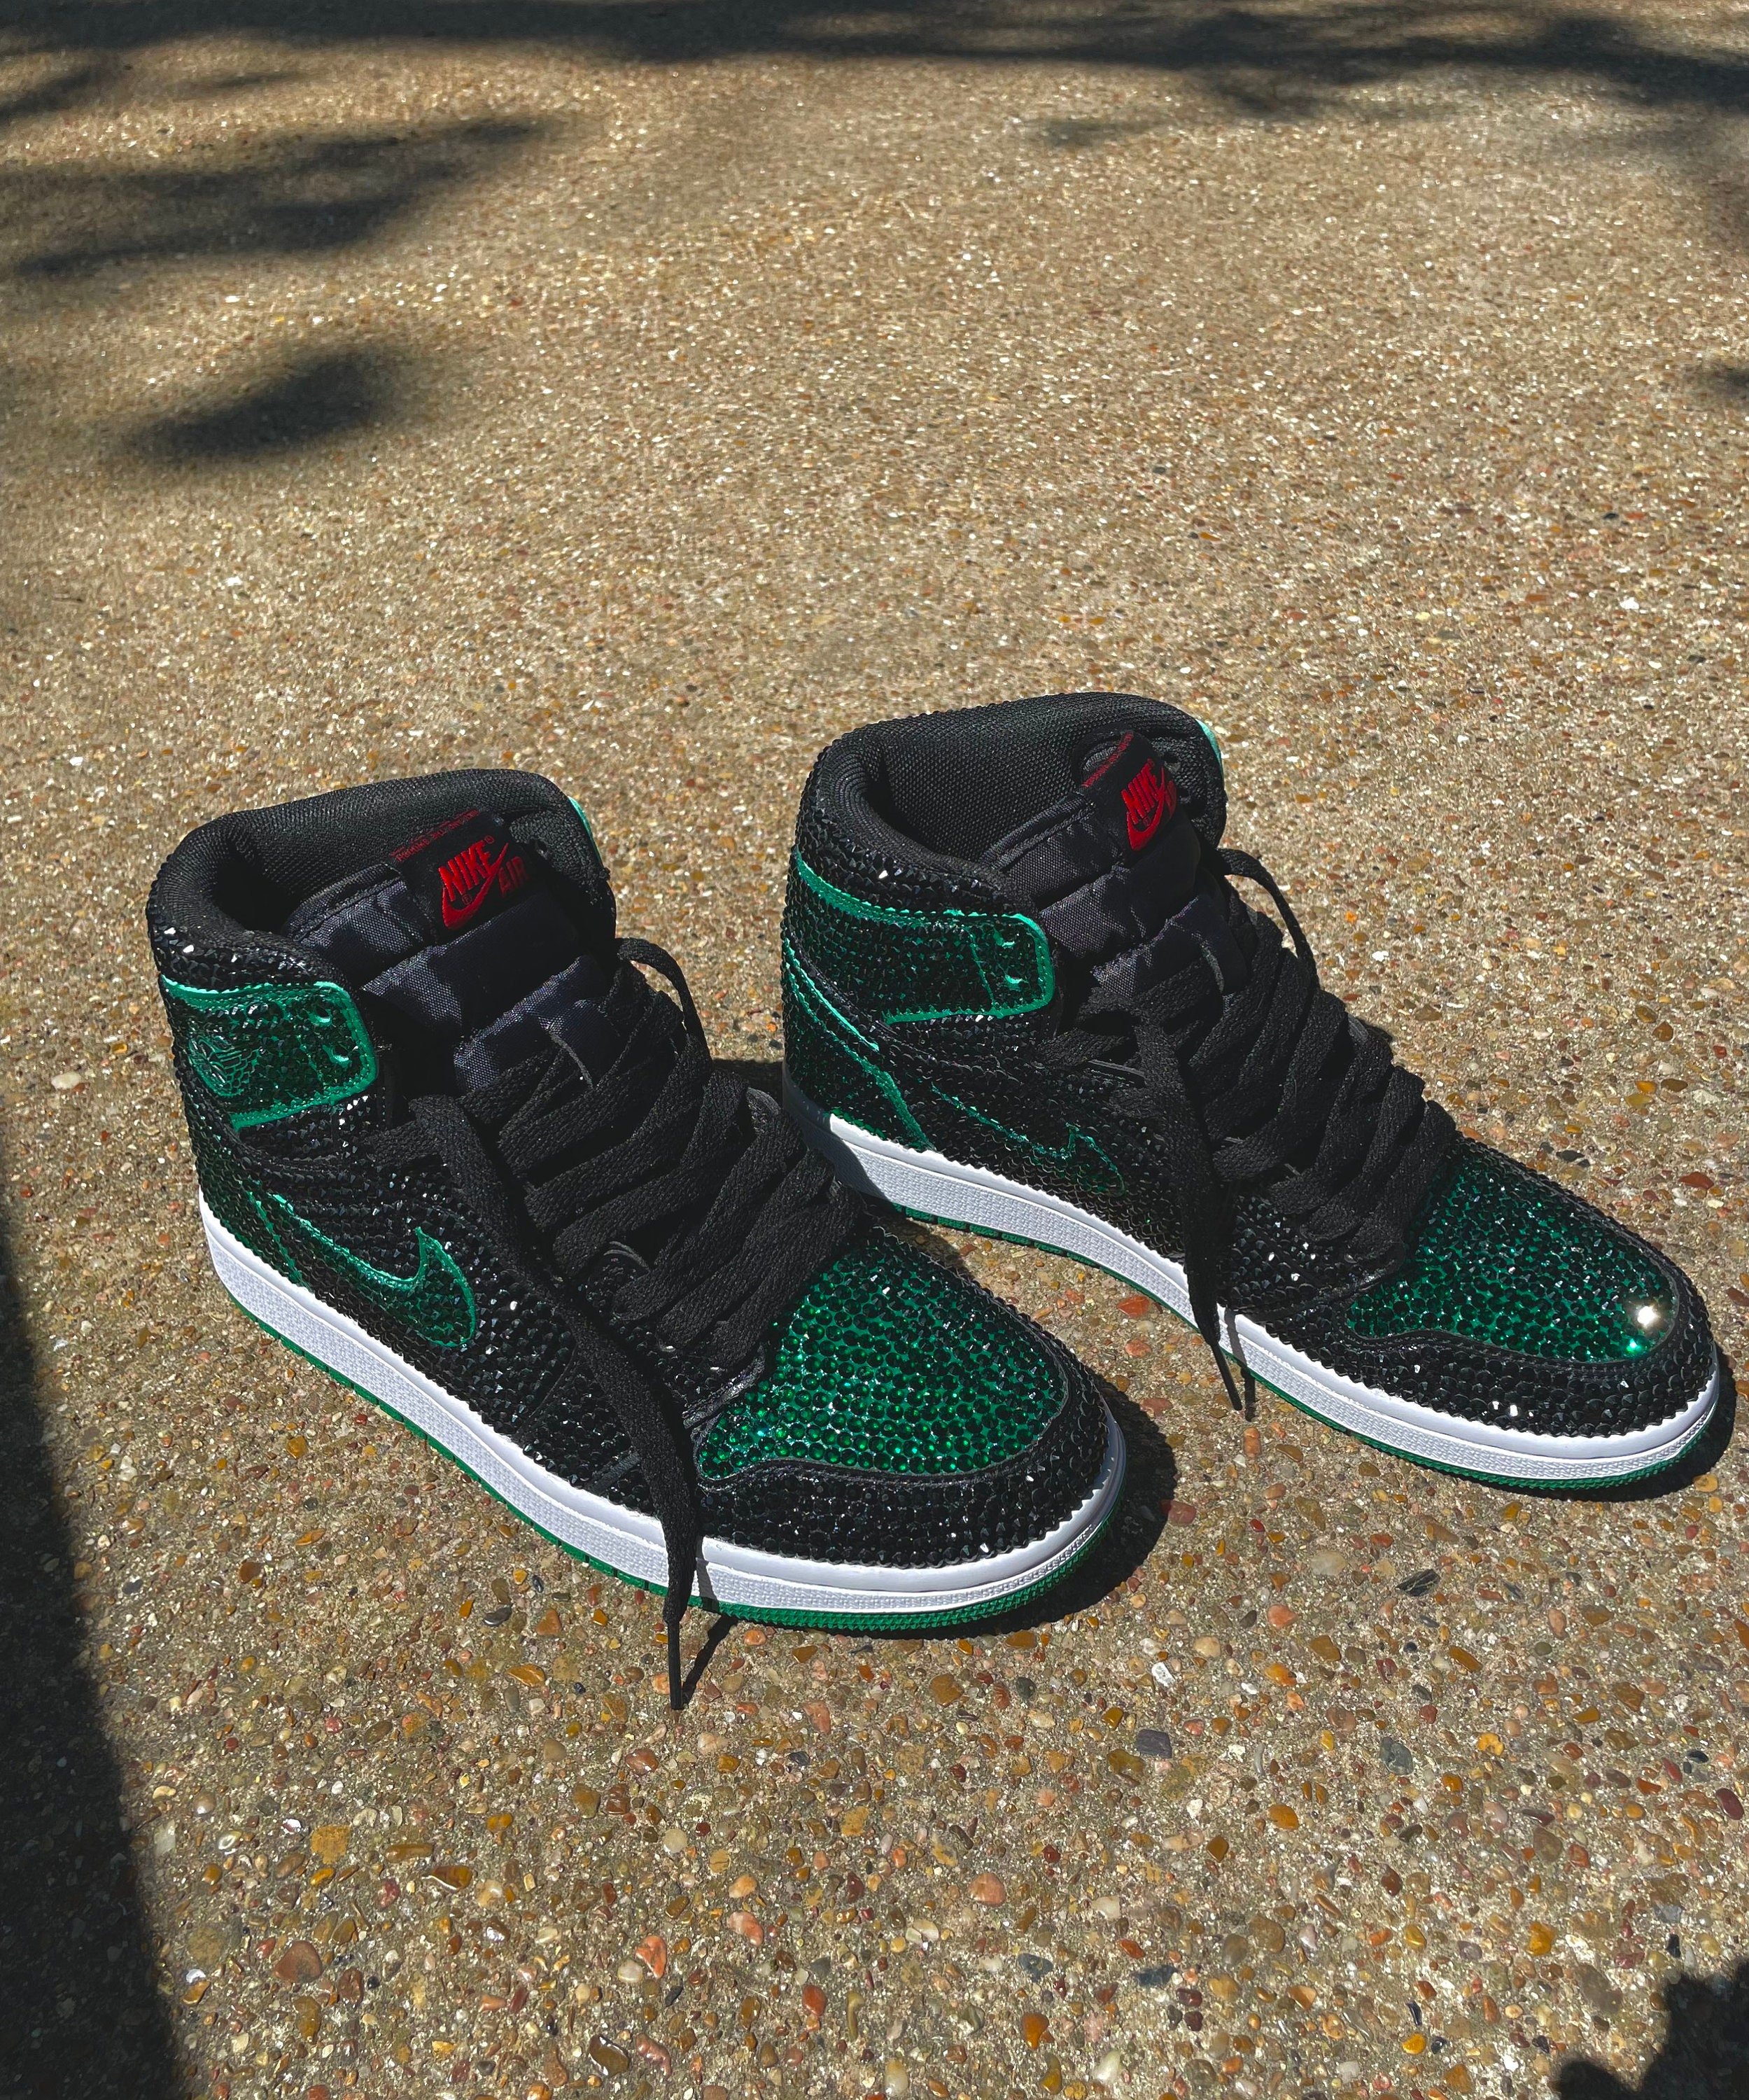 Custom “Spiderverse” Jordan 1